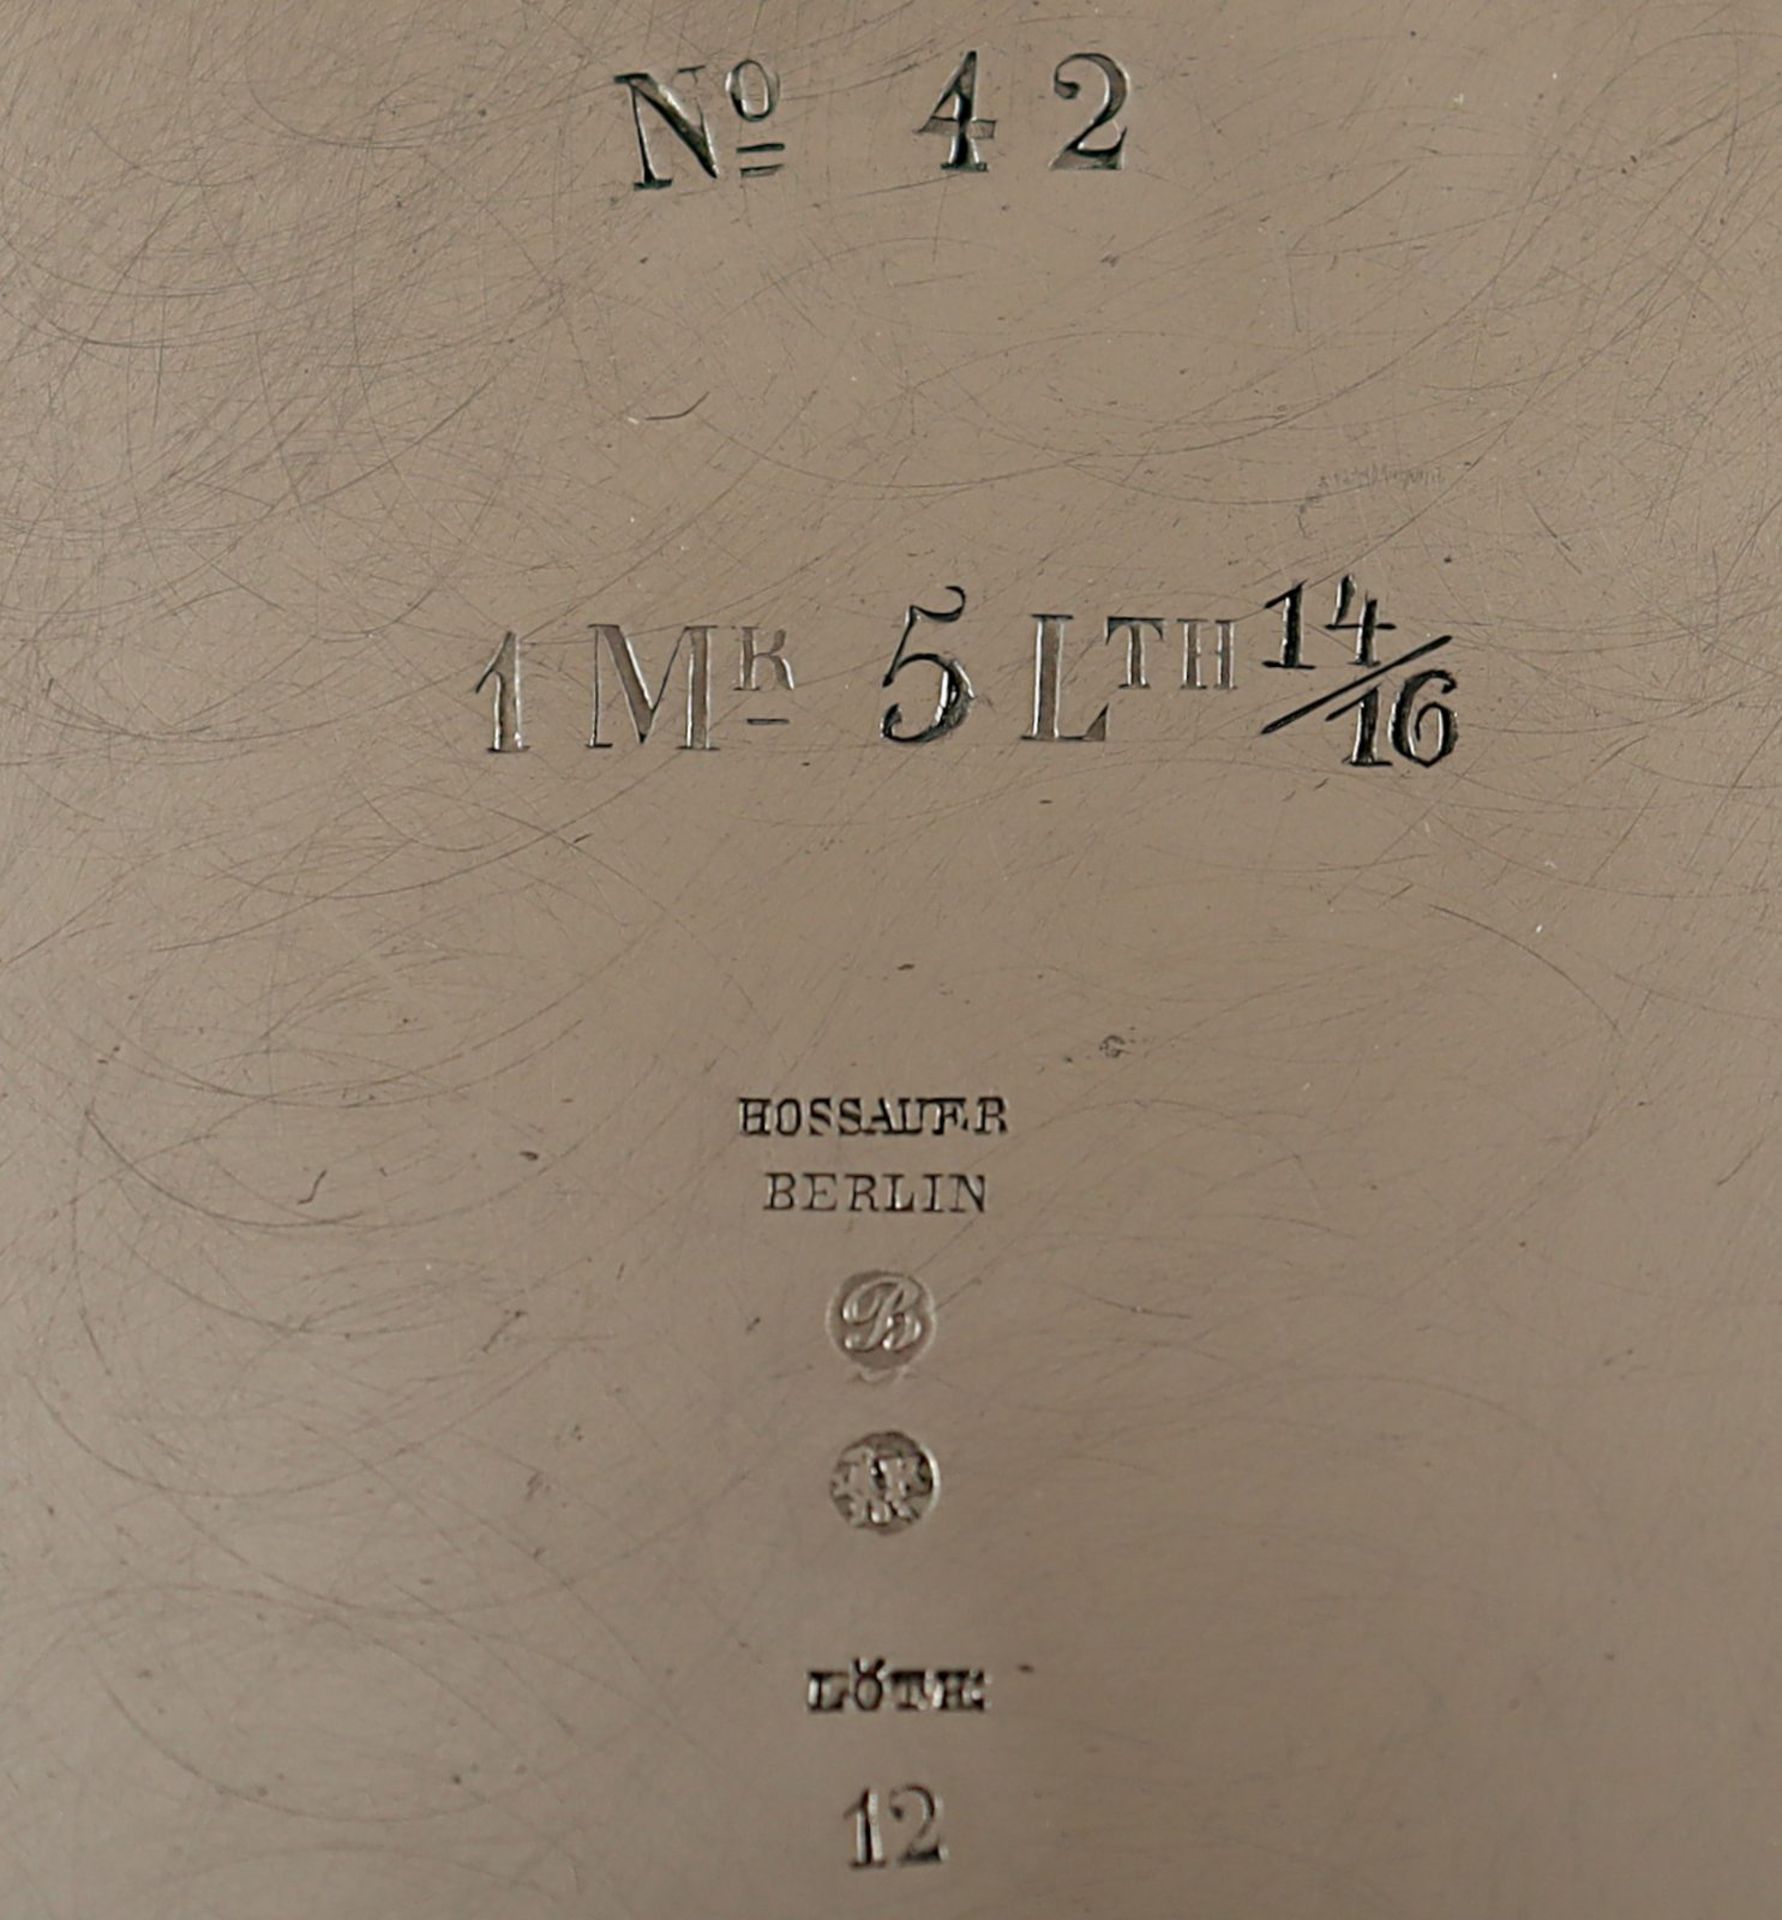 SATZ DREI BERLINER TELLER, 12lötig, HOSSAUER, BERLIN, um 1840 - Bild 2 aus 4